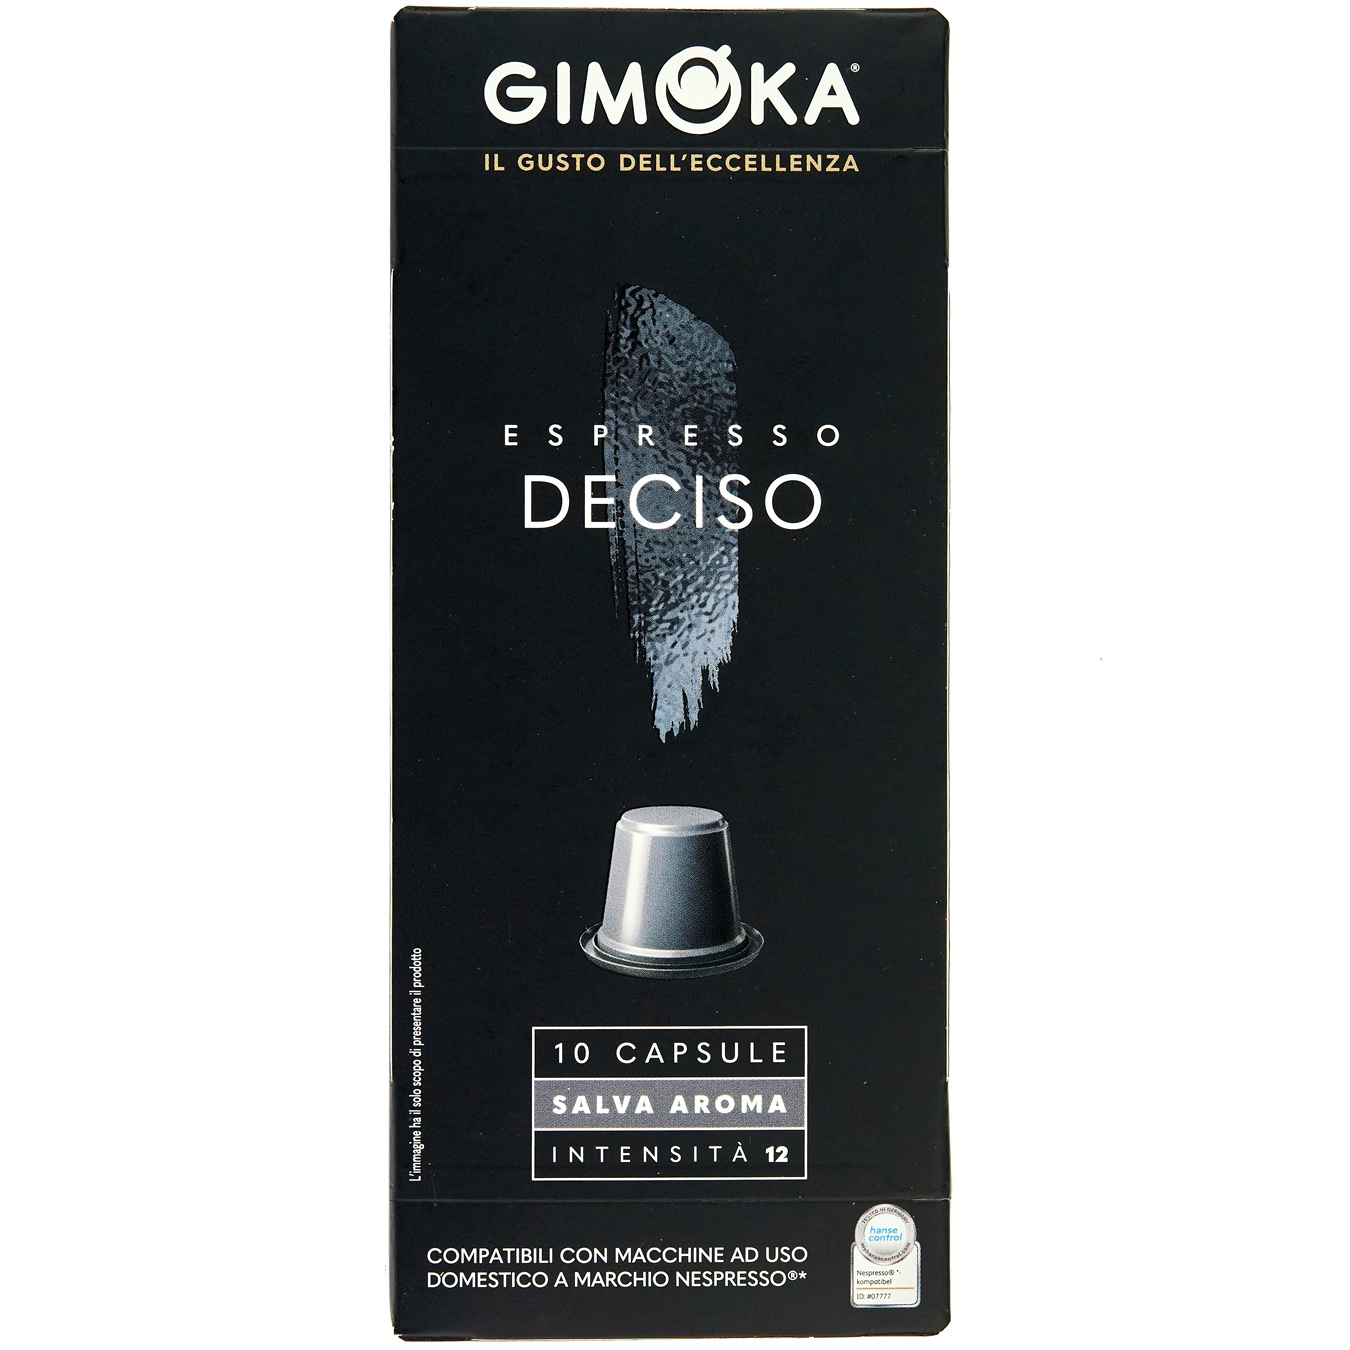 Gimoka Espresso Deciso Ground Coffee Capsule 10pcs*55g